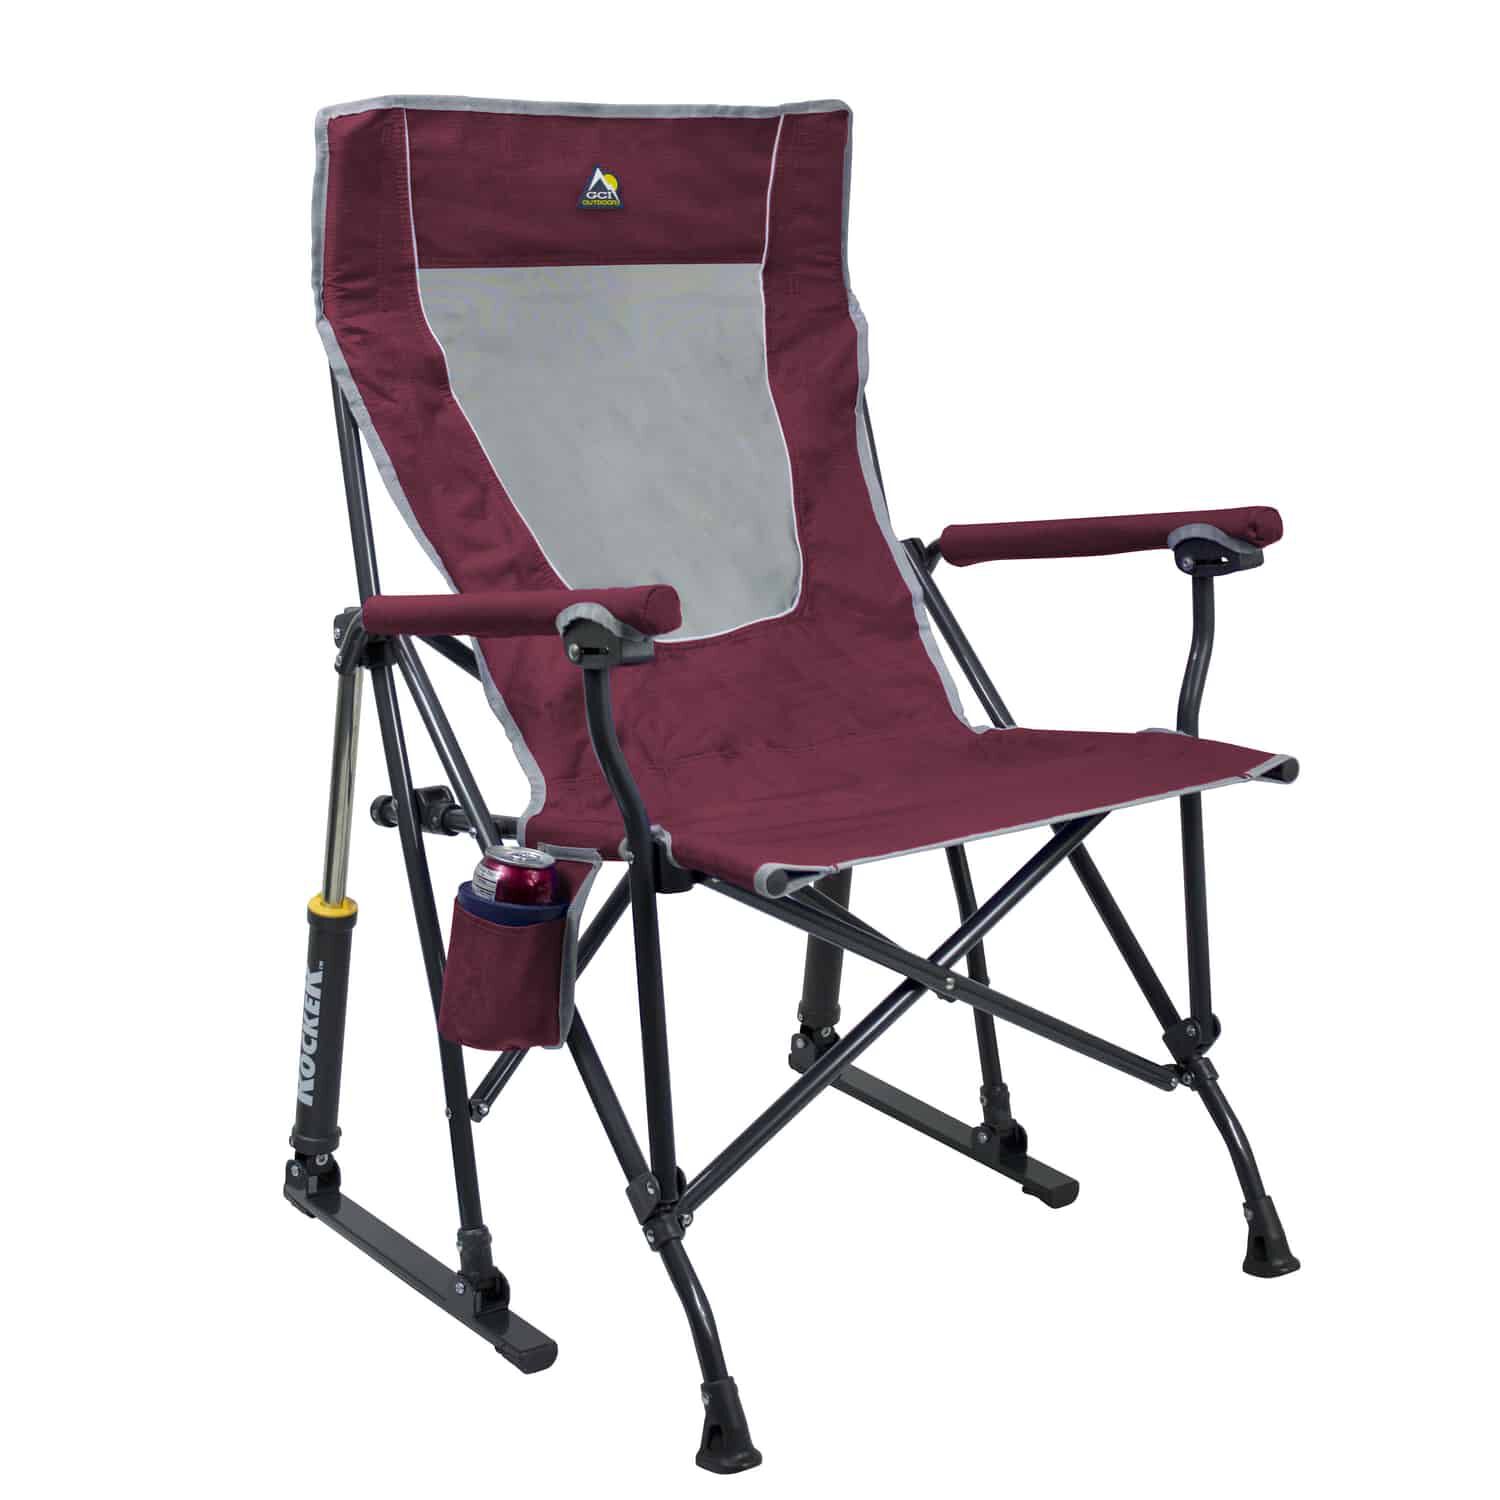 gci outdoor roadtrip rocker outdoor rocking chair